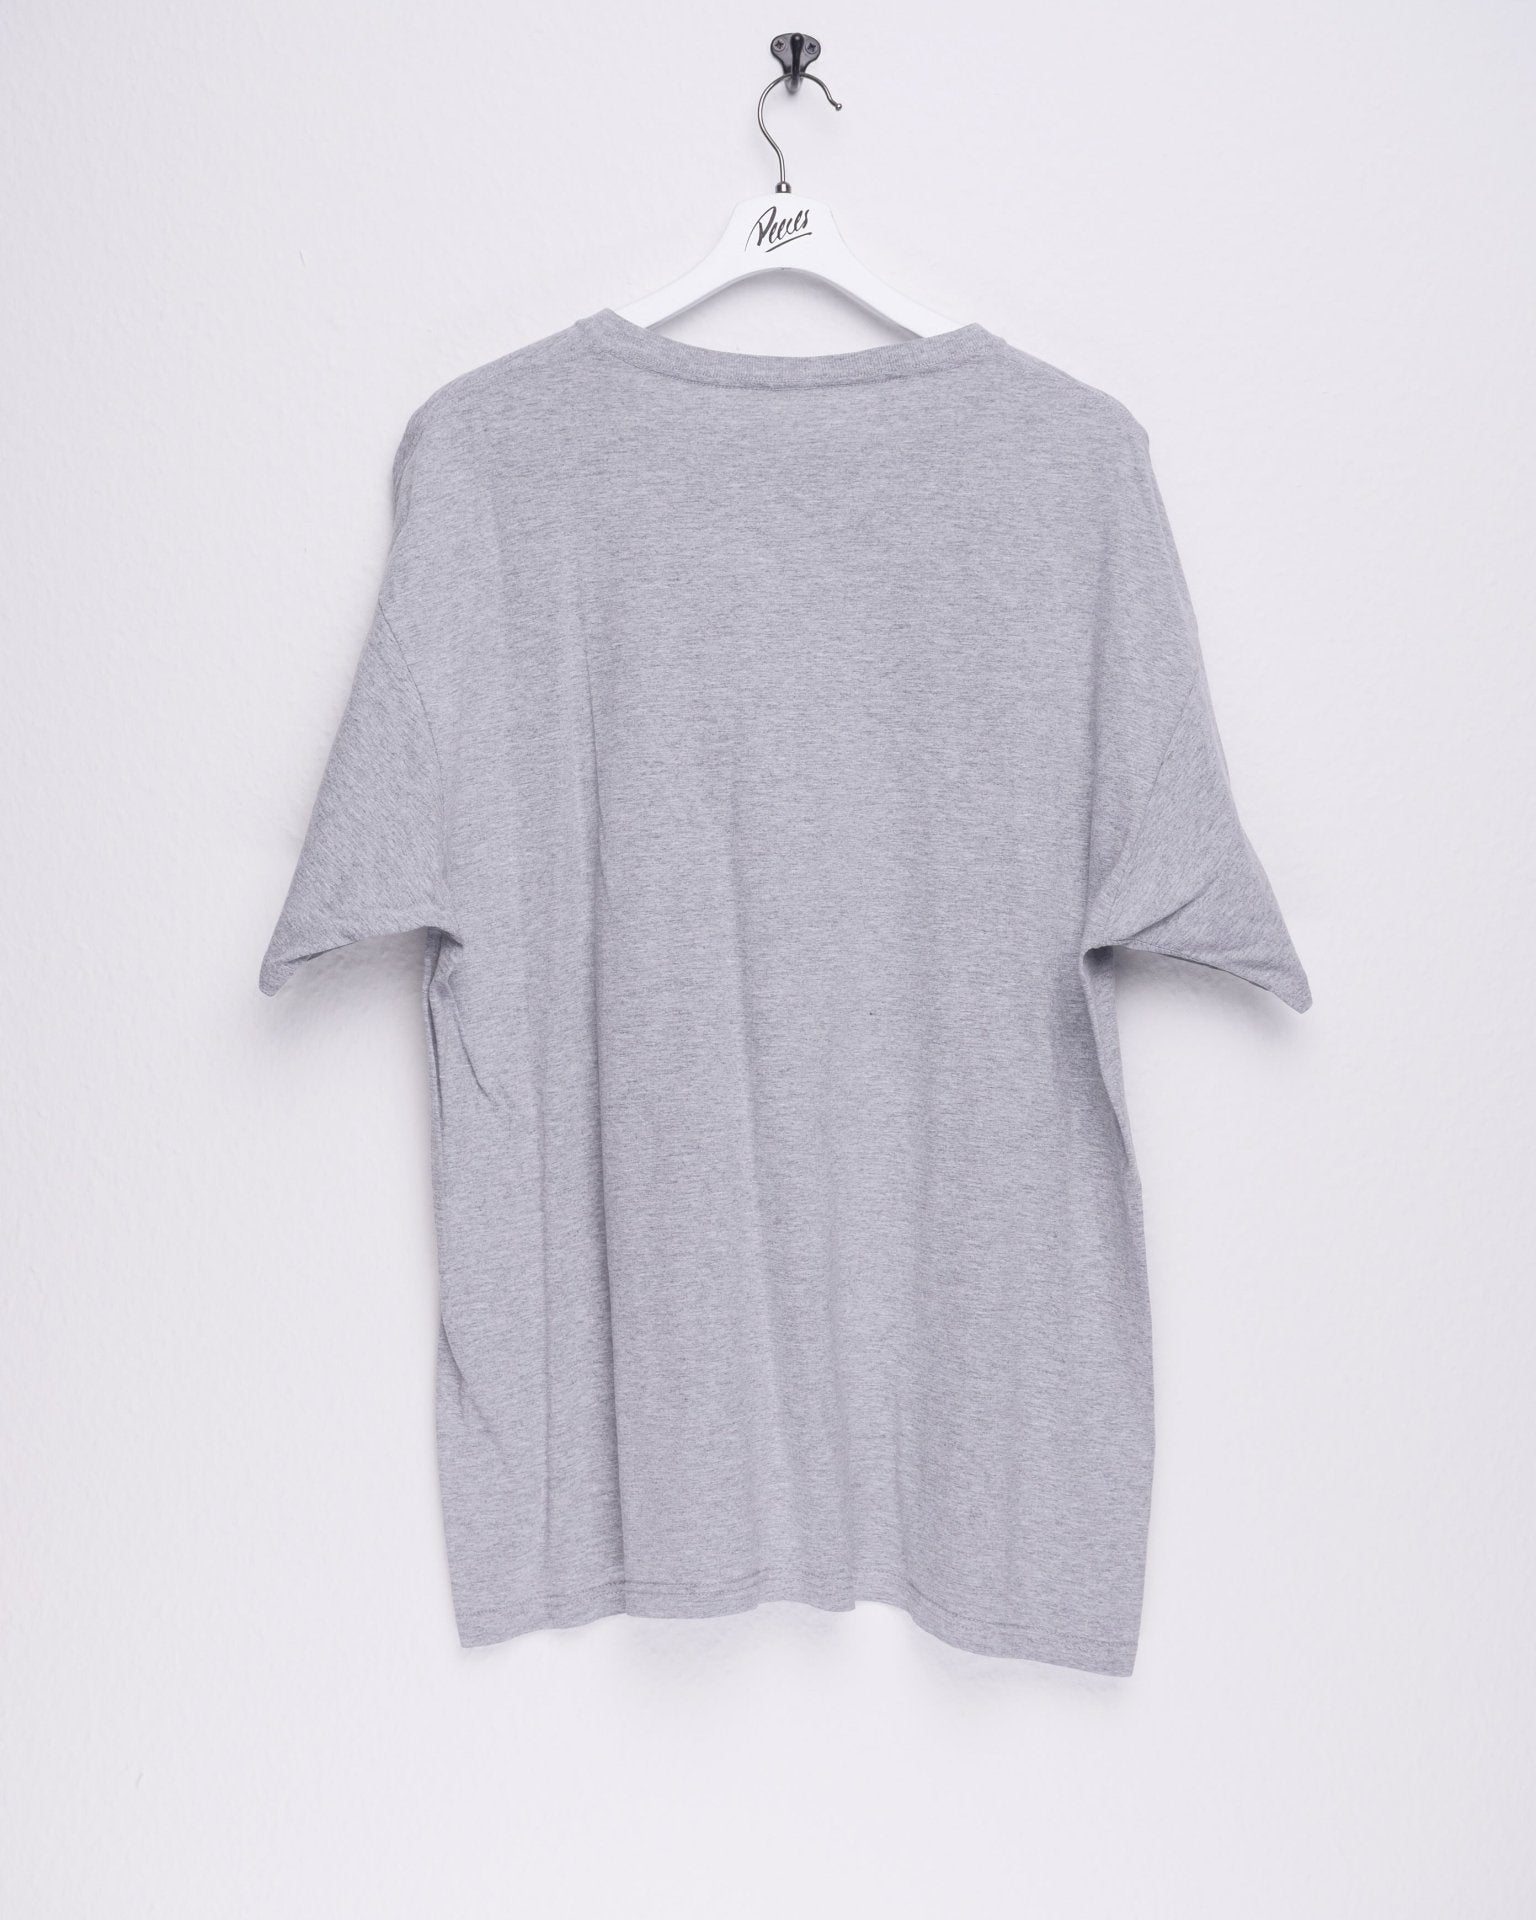 printed 'American Eagle' grey oversized Shirt - Peeces